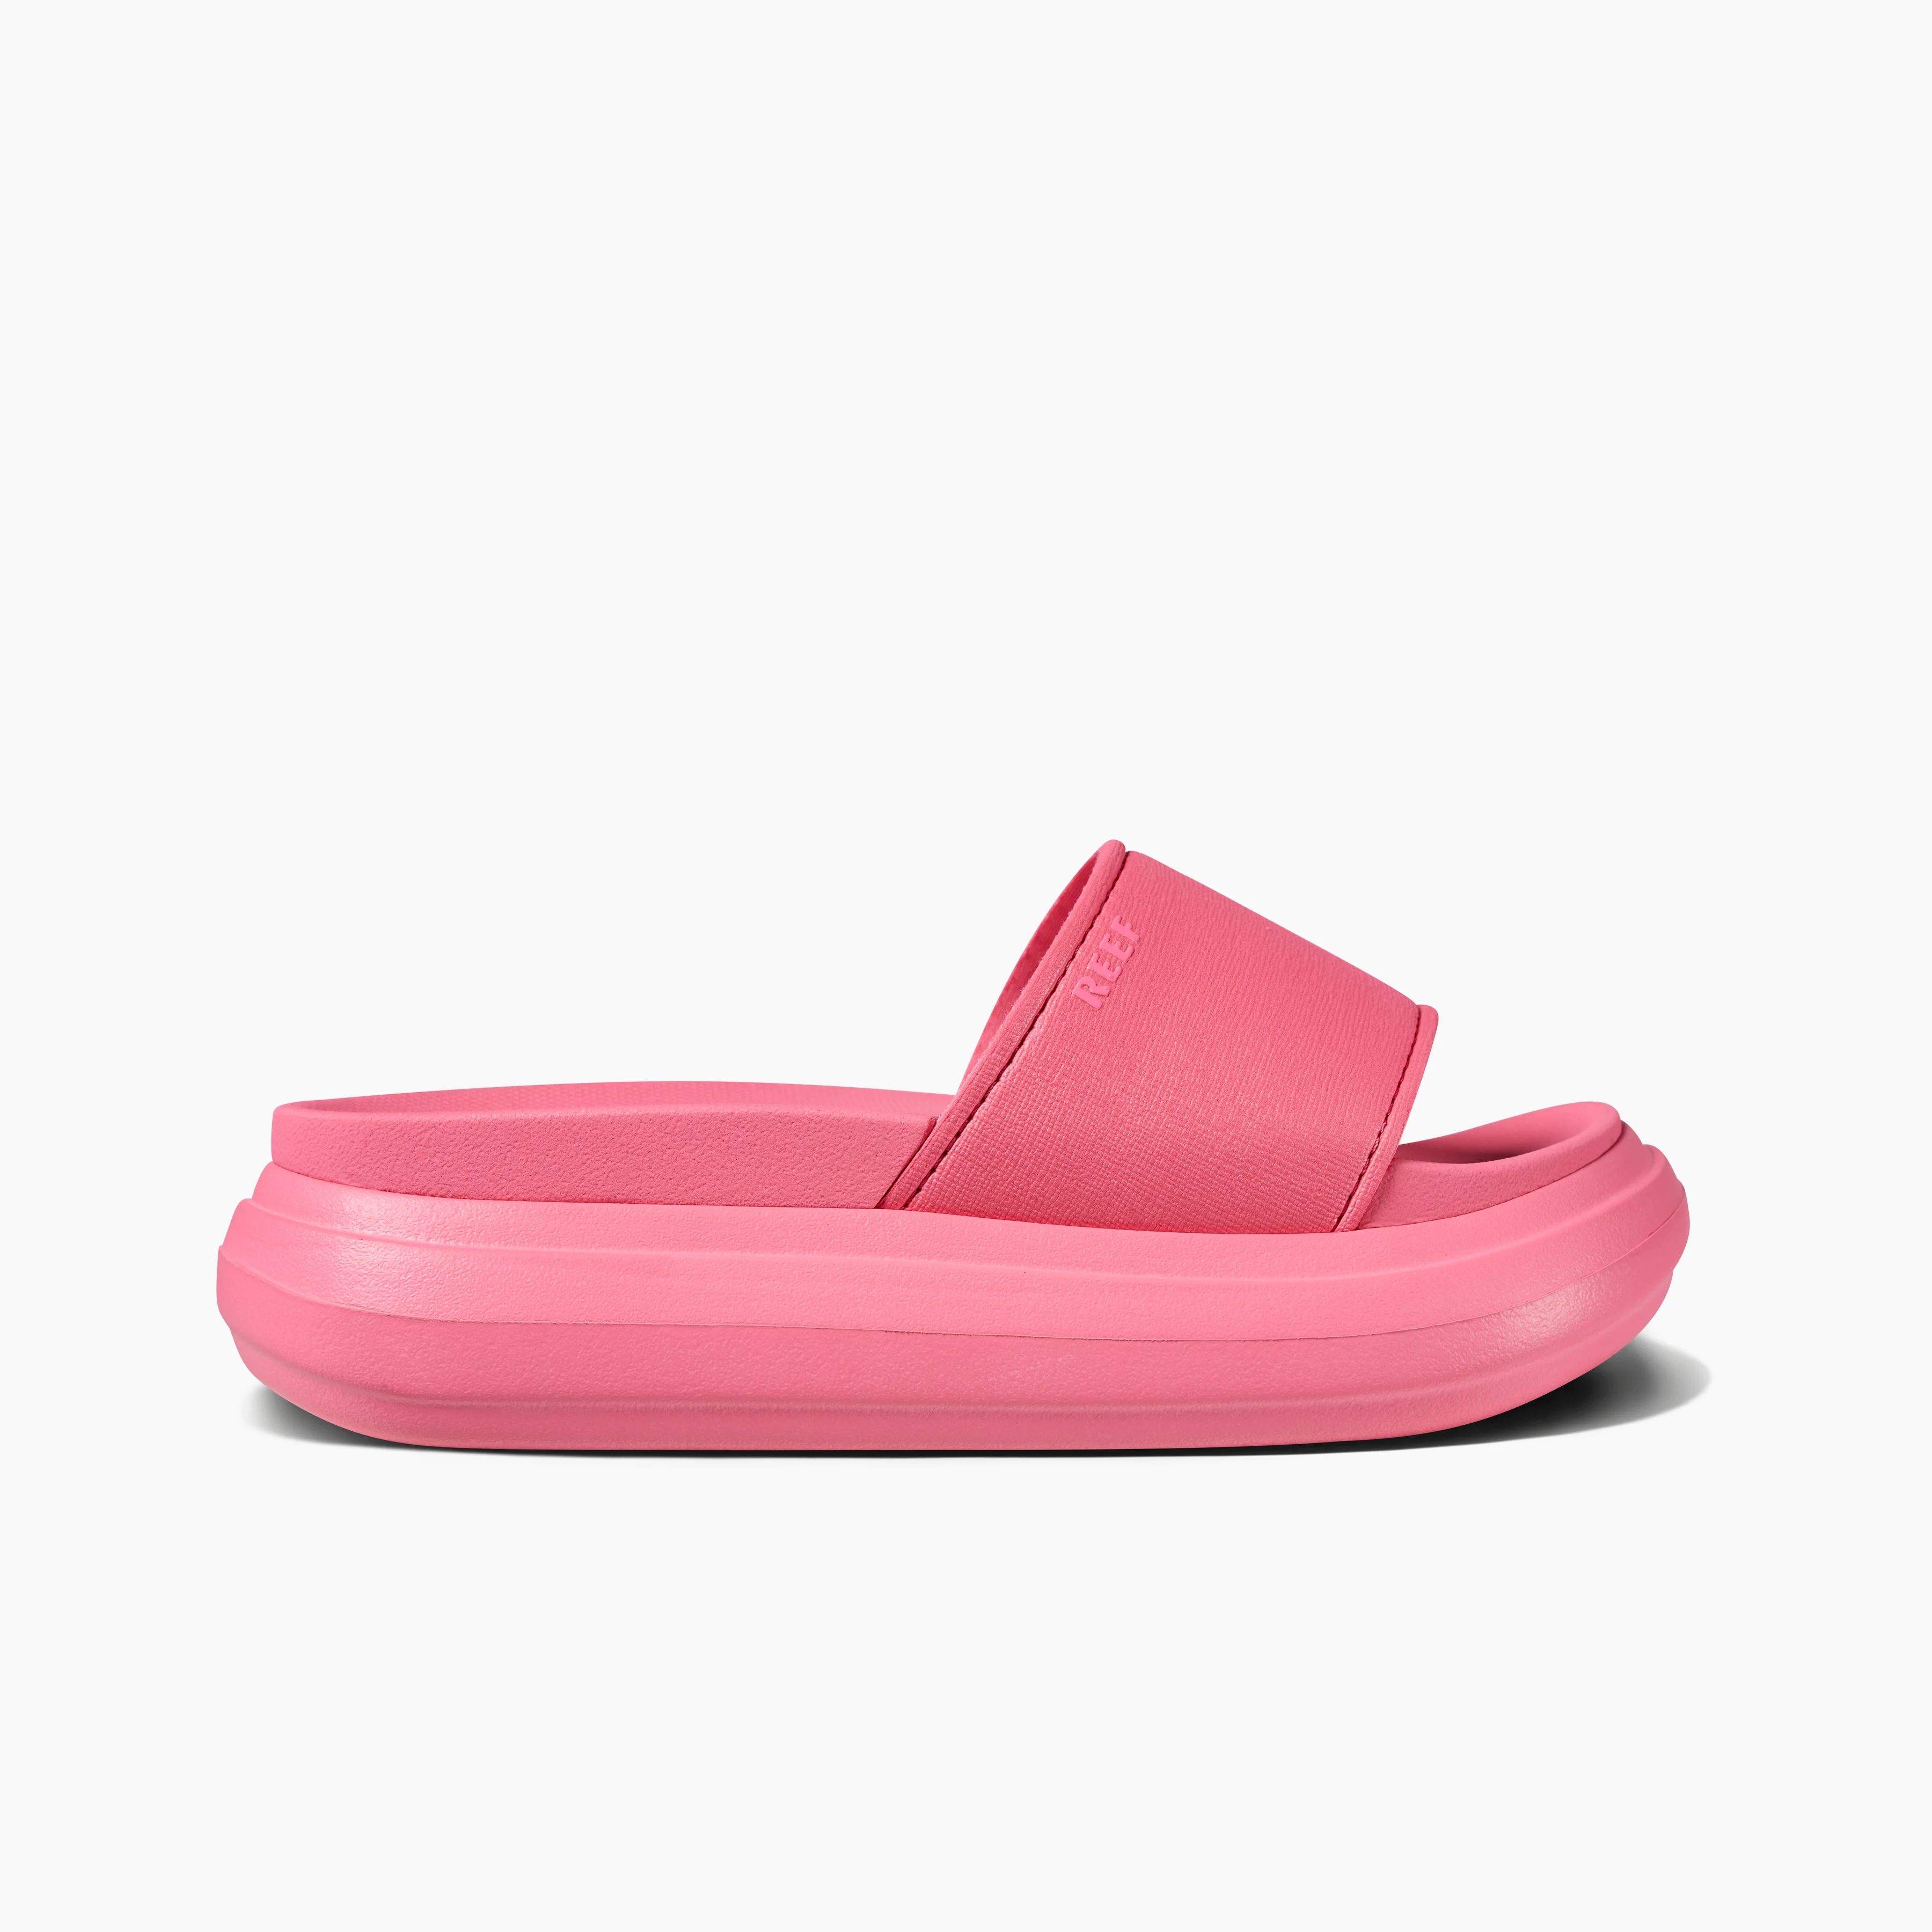 Women's Cushion Bondi Bay Slides in Hot Pink side view